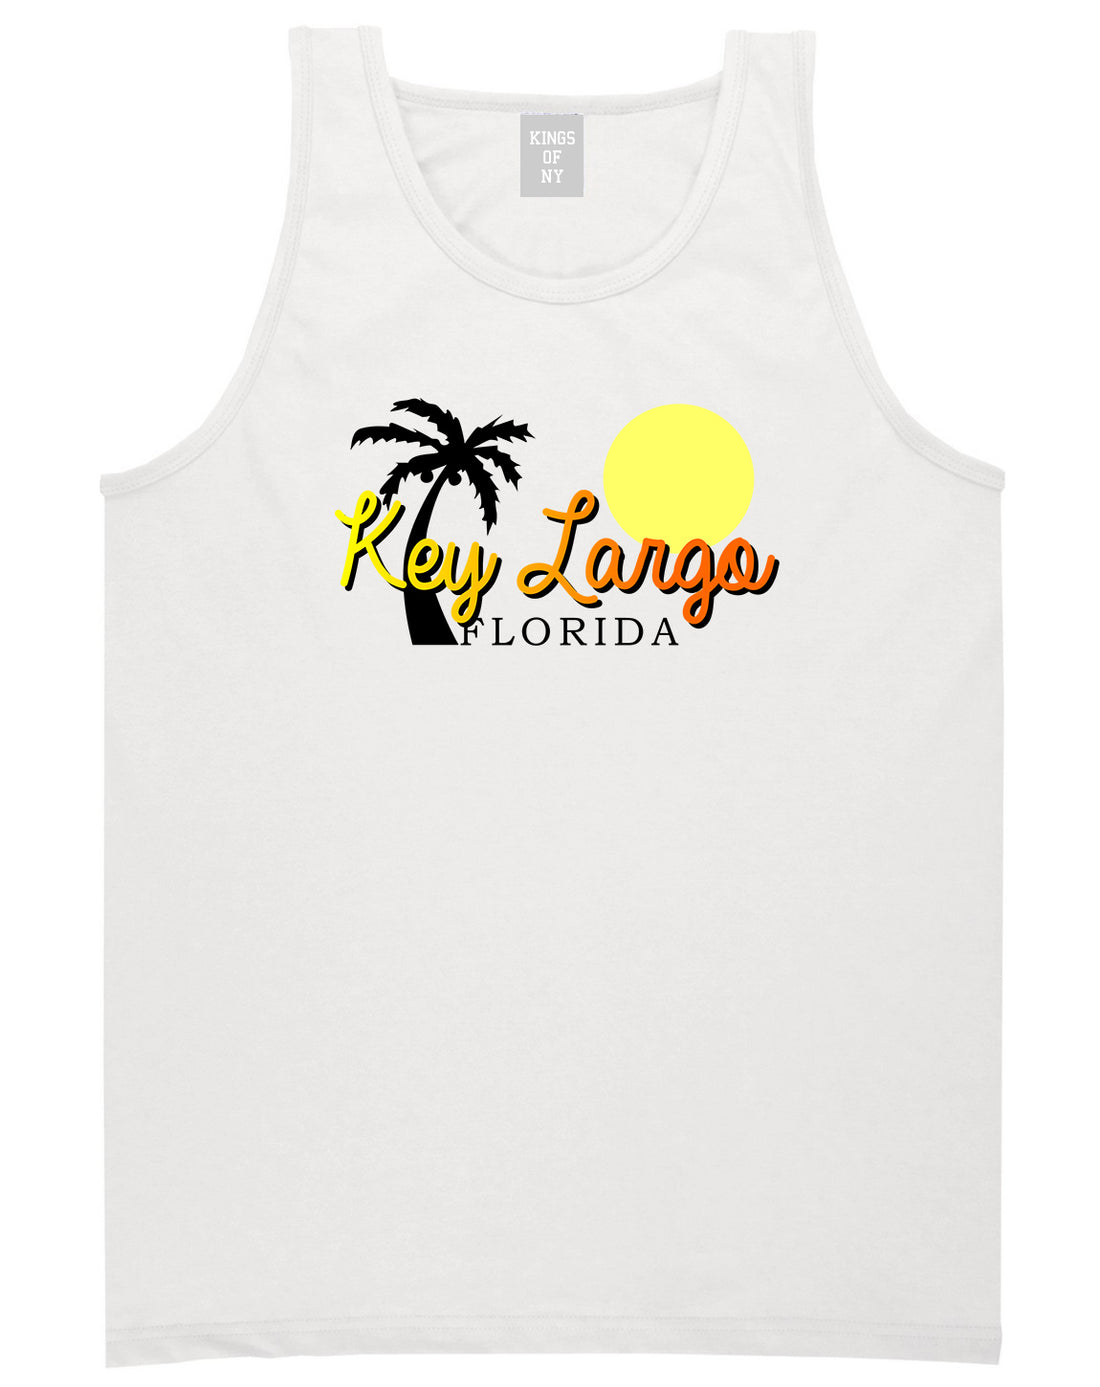 Key Largo Florida Souvenir Mens Tank Top Shirt White by Kings Of NY